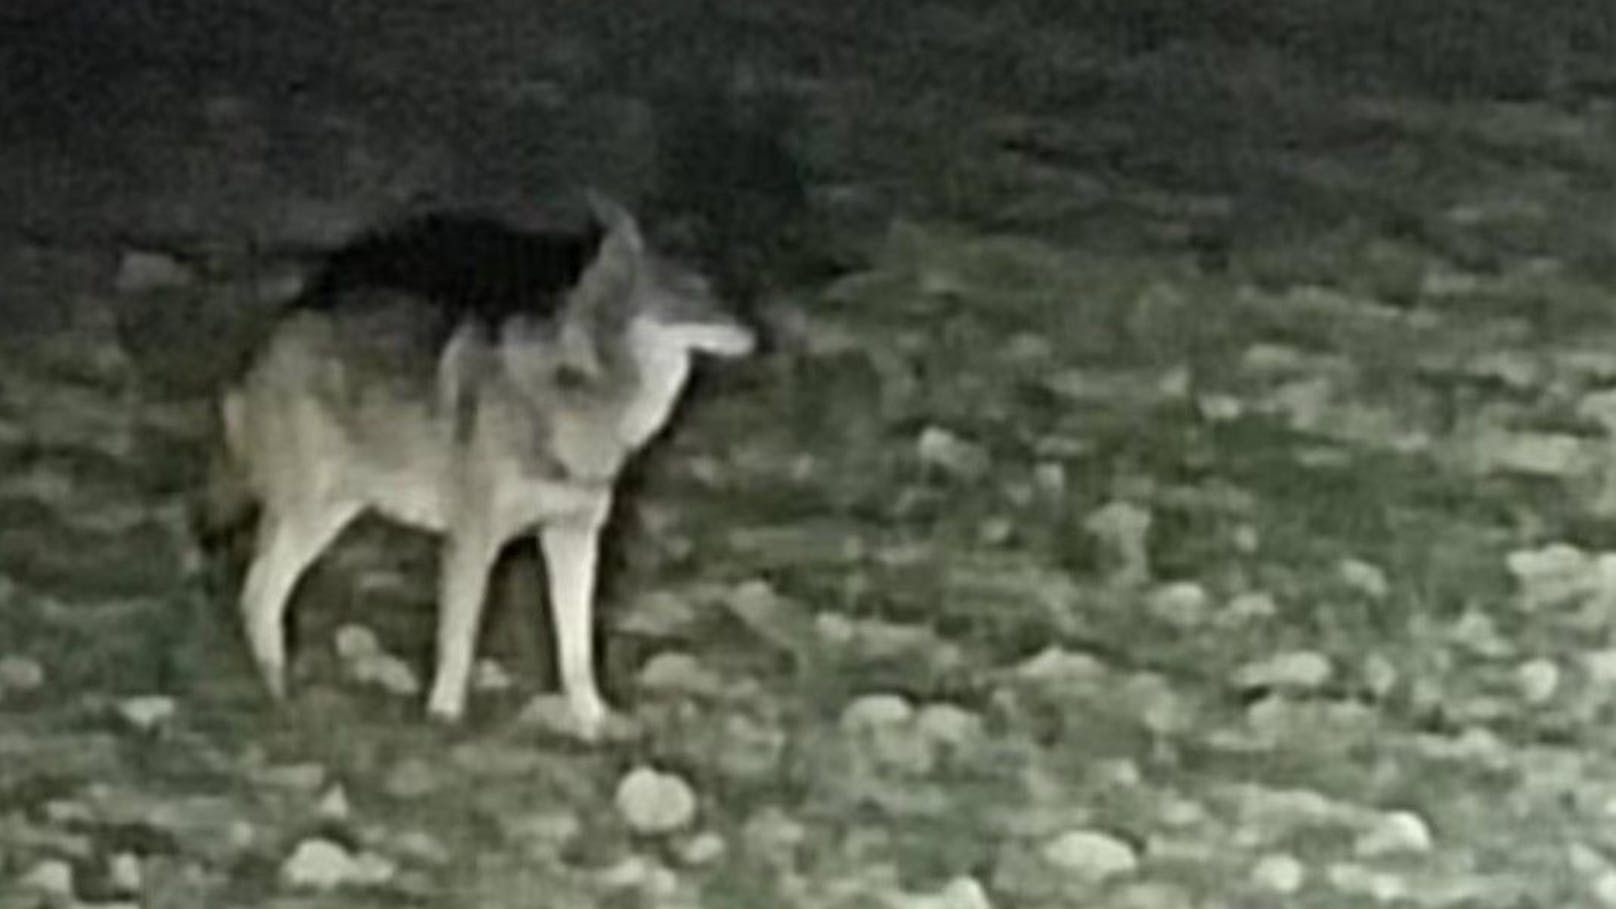 Wolf kommt Familie zu nahe – jetzt soll er sterben